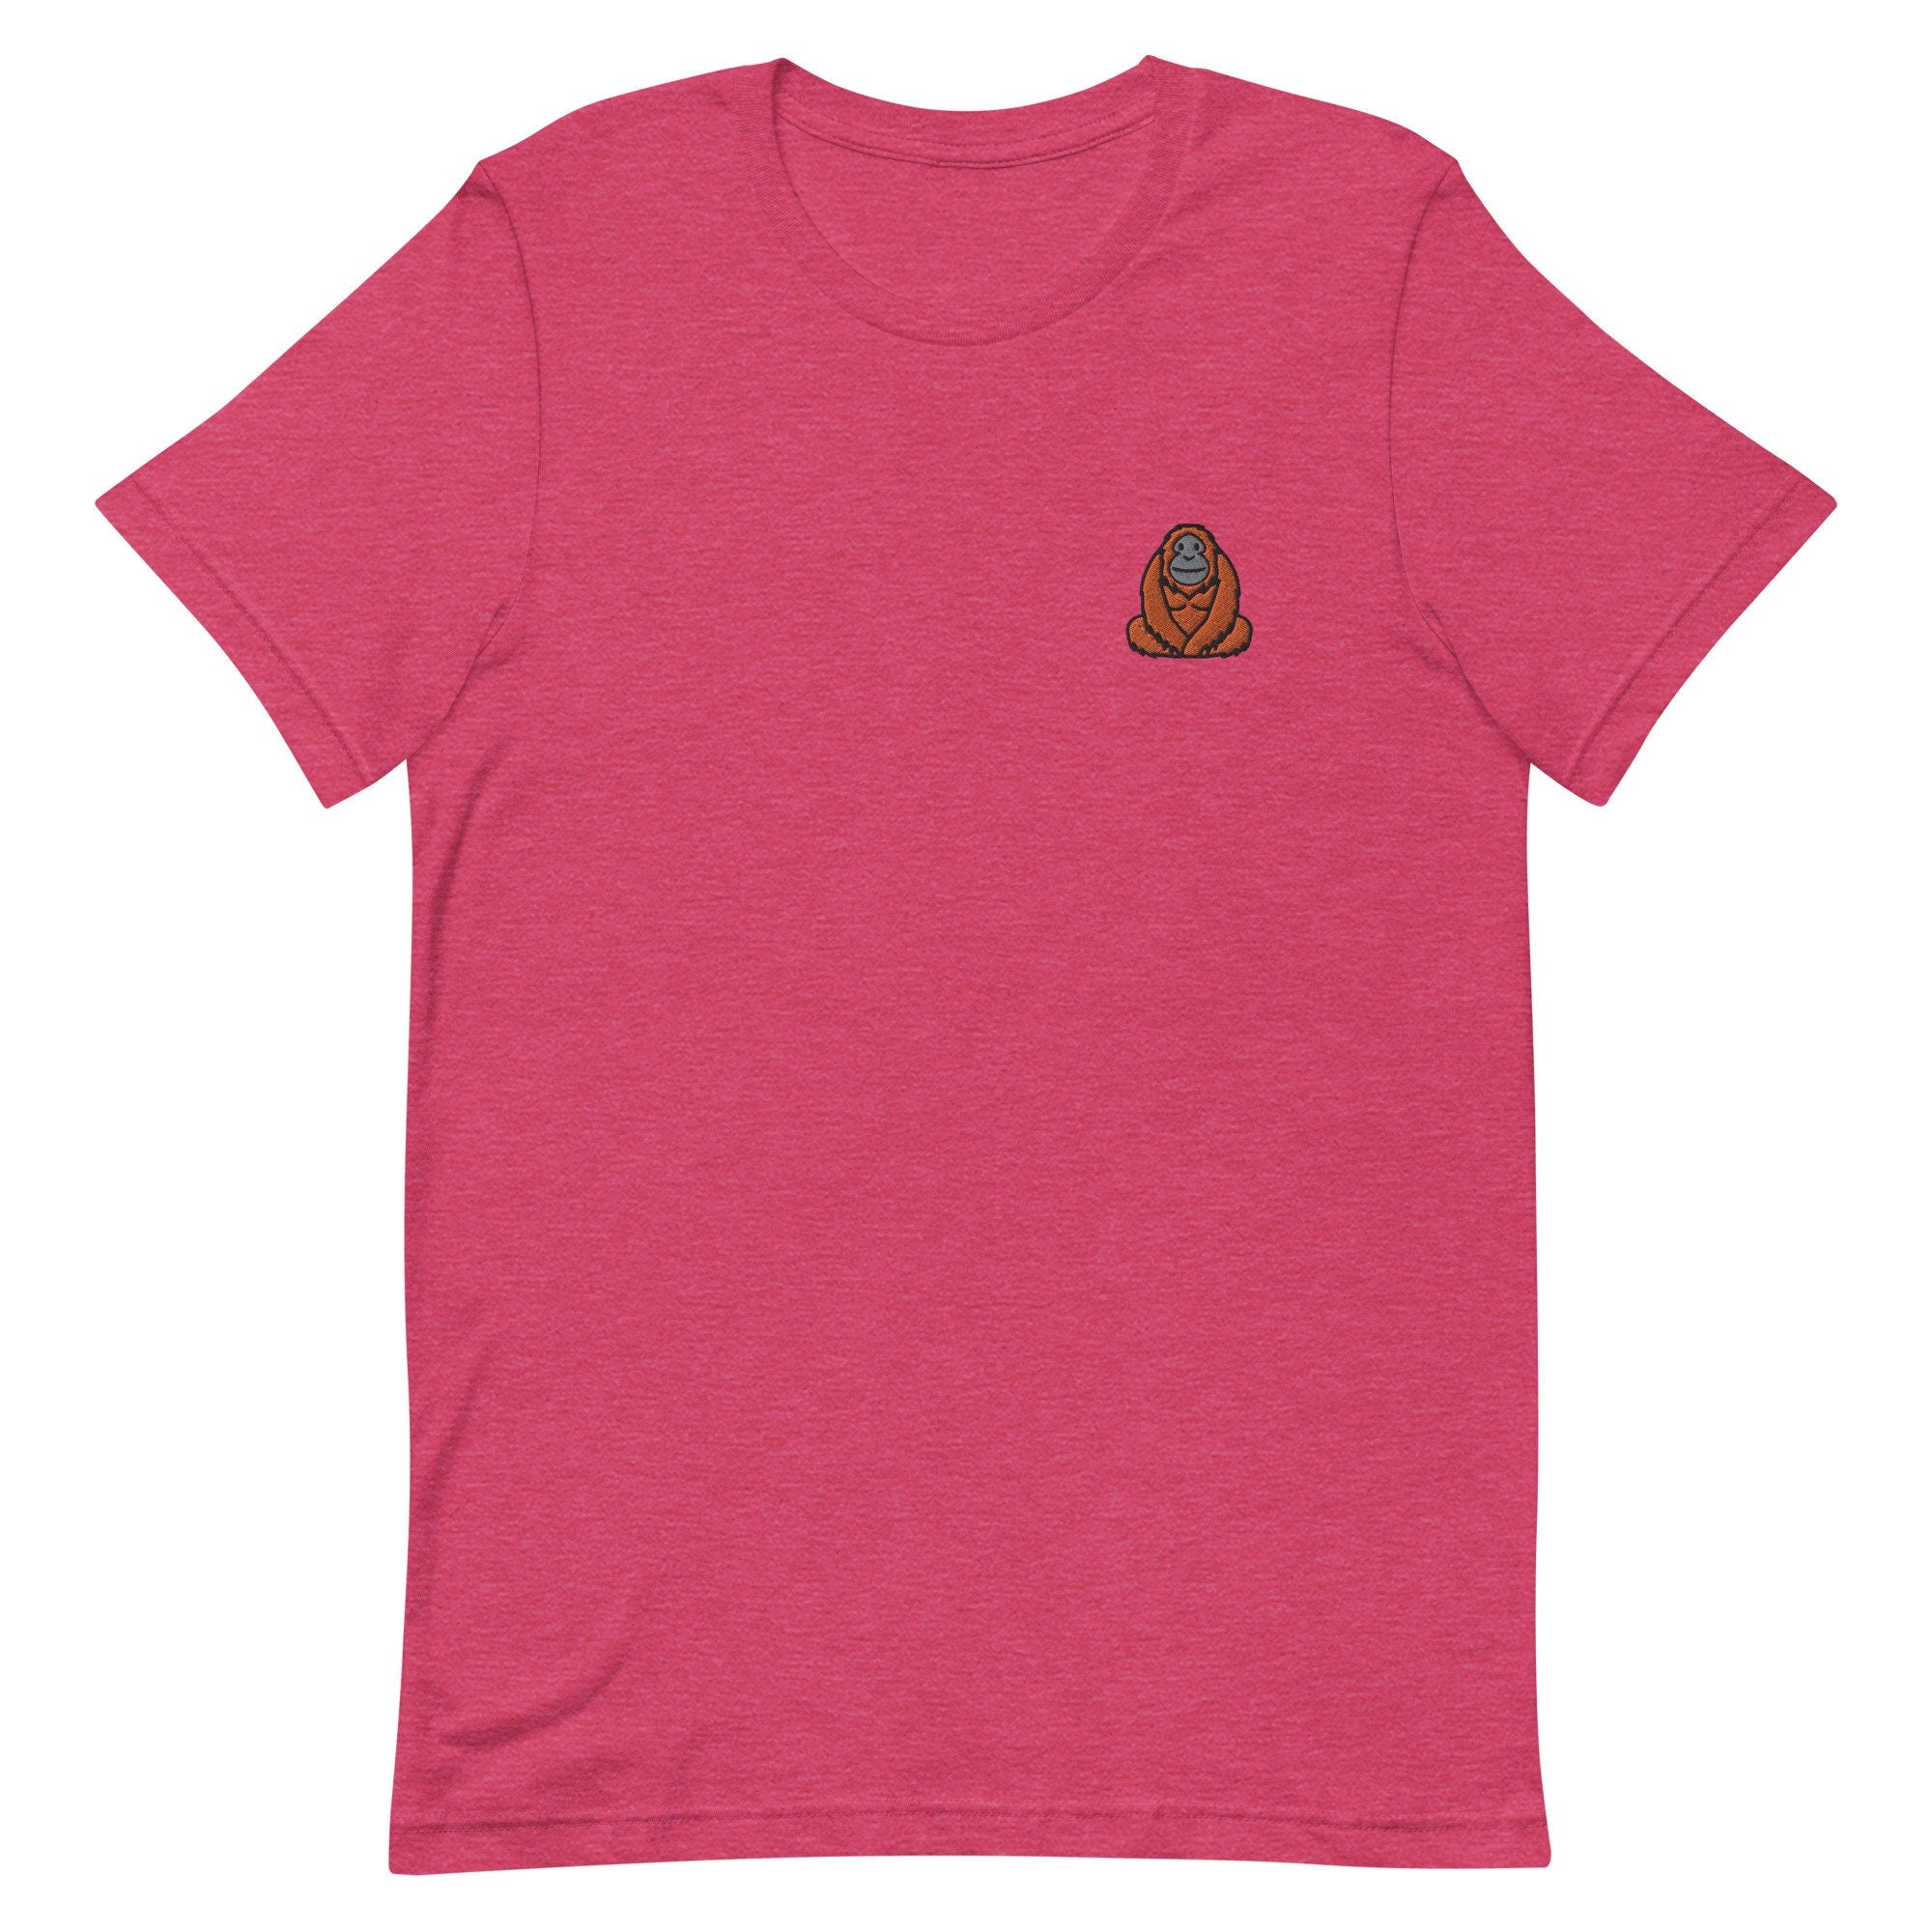 Orangutan Premium Men's T-Shirt, Embroidered Men's T-Shirt Gift for Boyfriend, Men's Short Sleeve Shirt - Multiple Colors